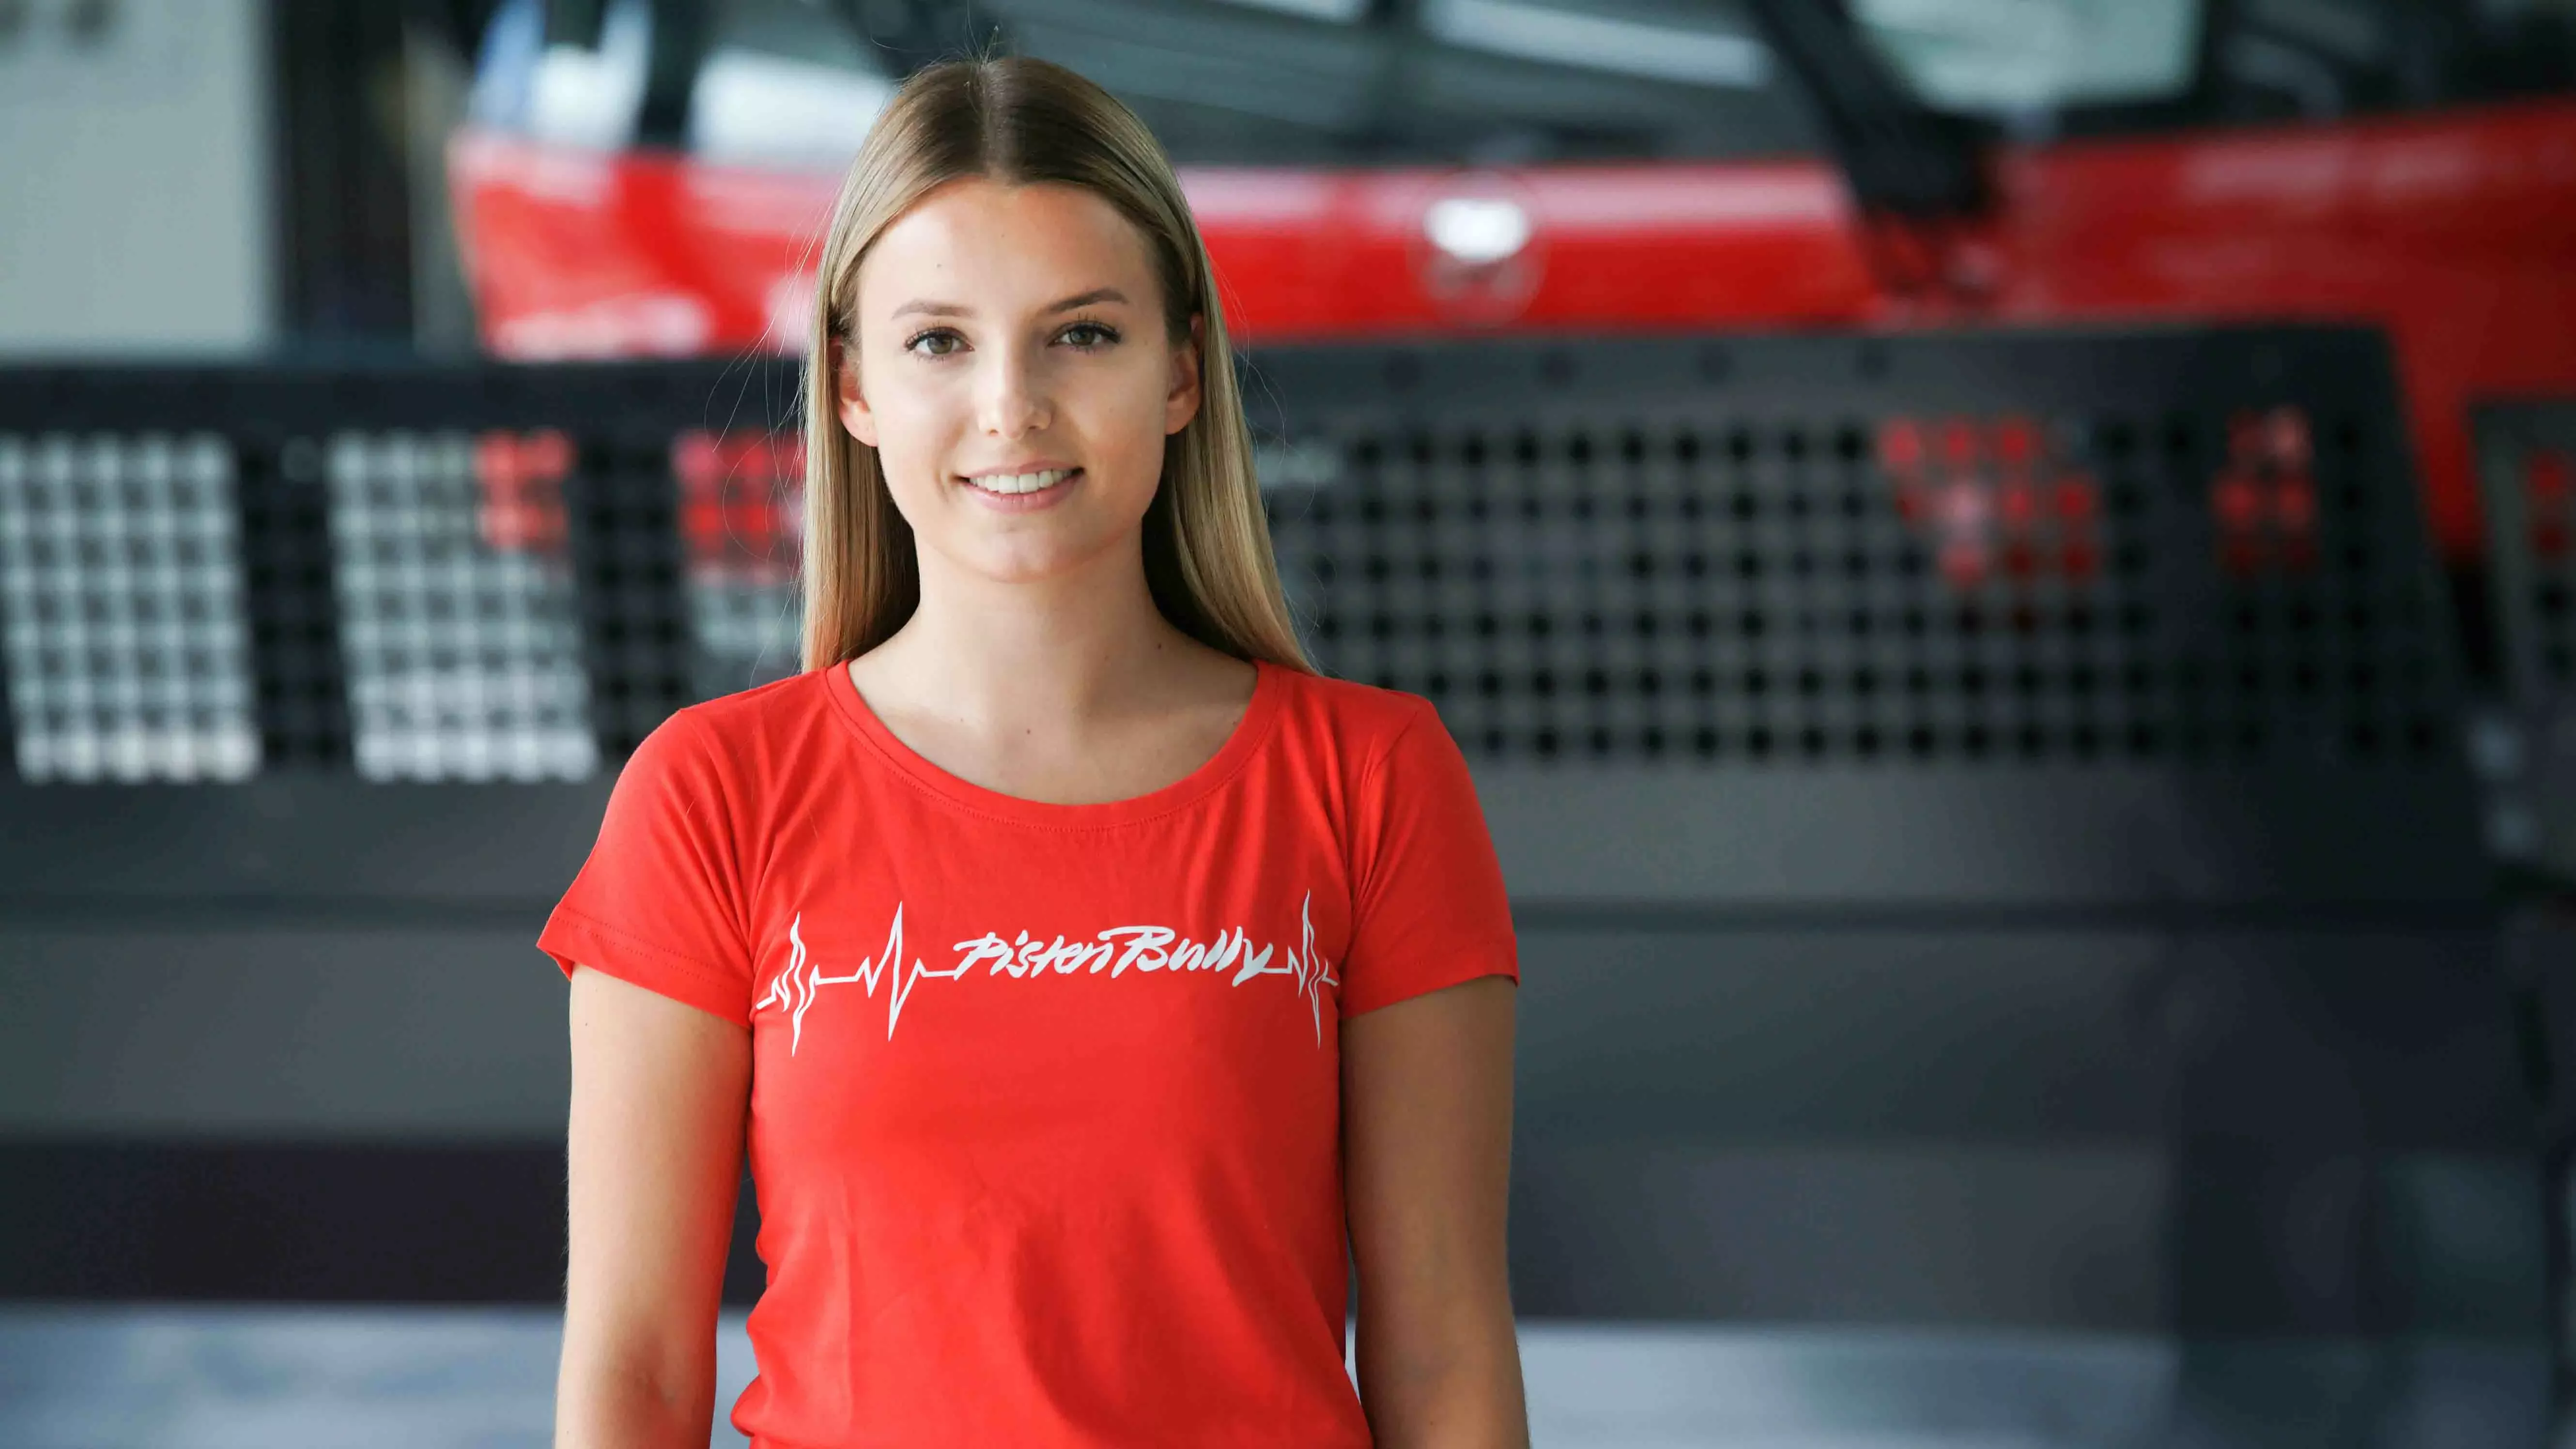 PistenBully T-shirt da donna battito cardiaco